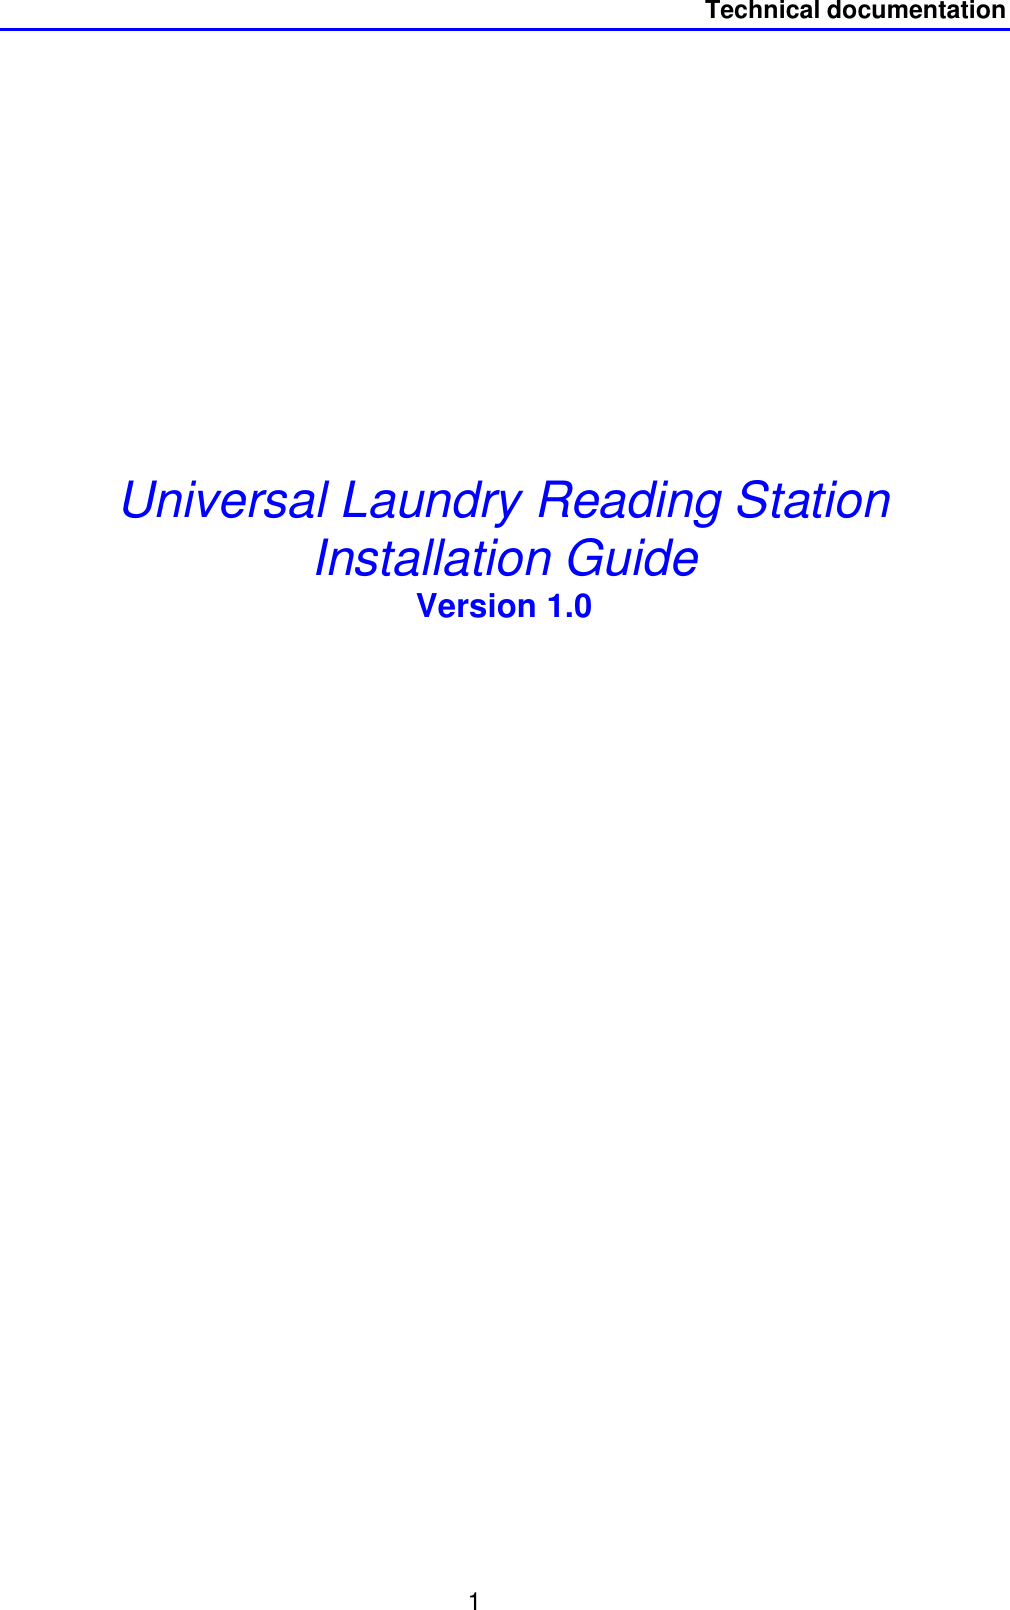 Technical documentation1Universal Laundry Reading StationInstallation GuideVersion 1.0